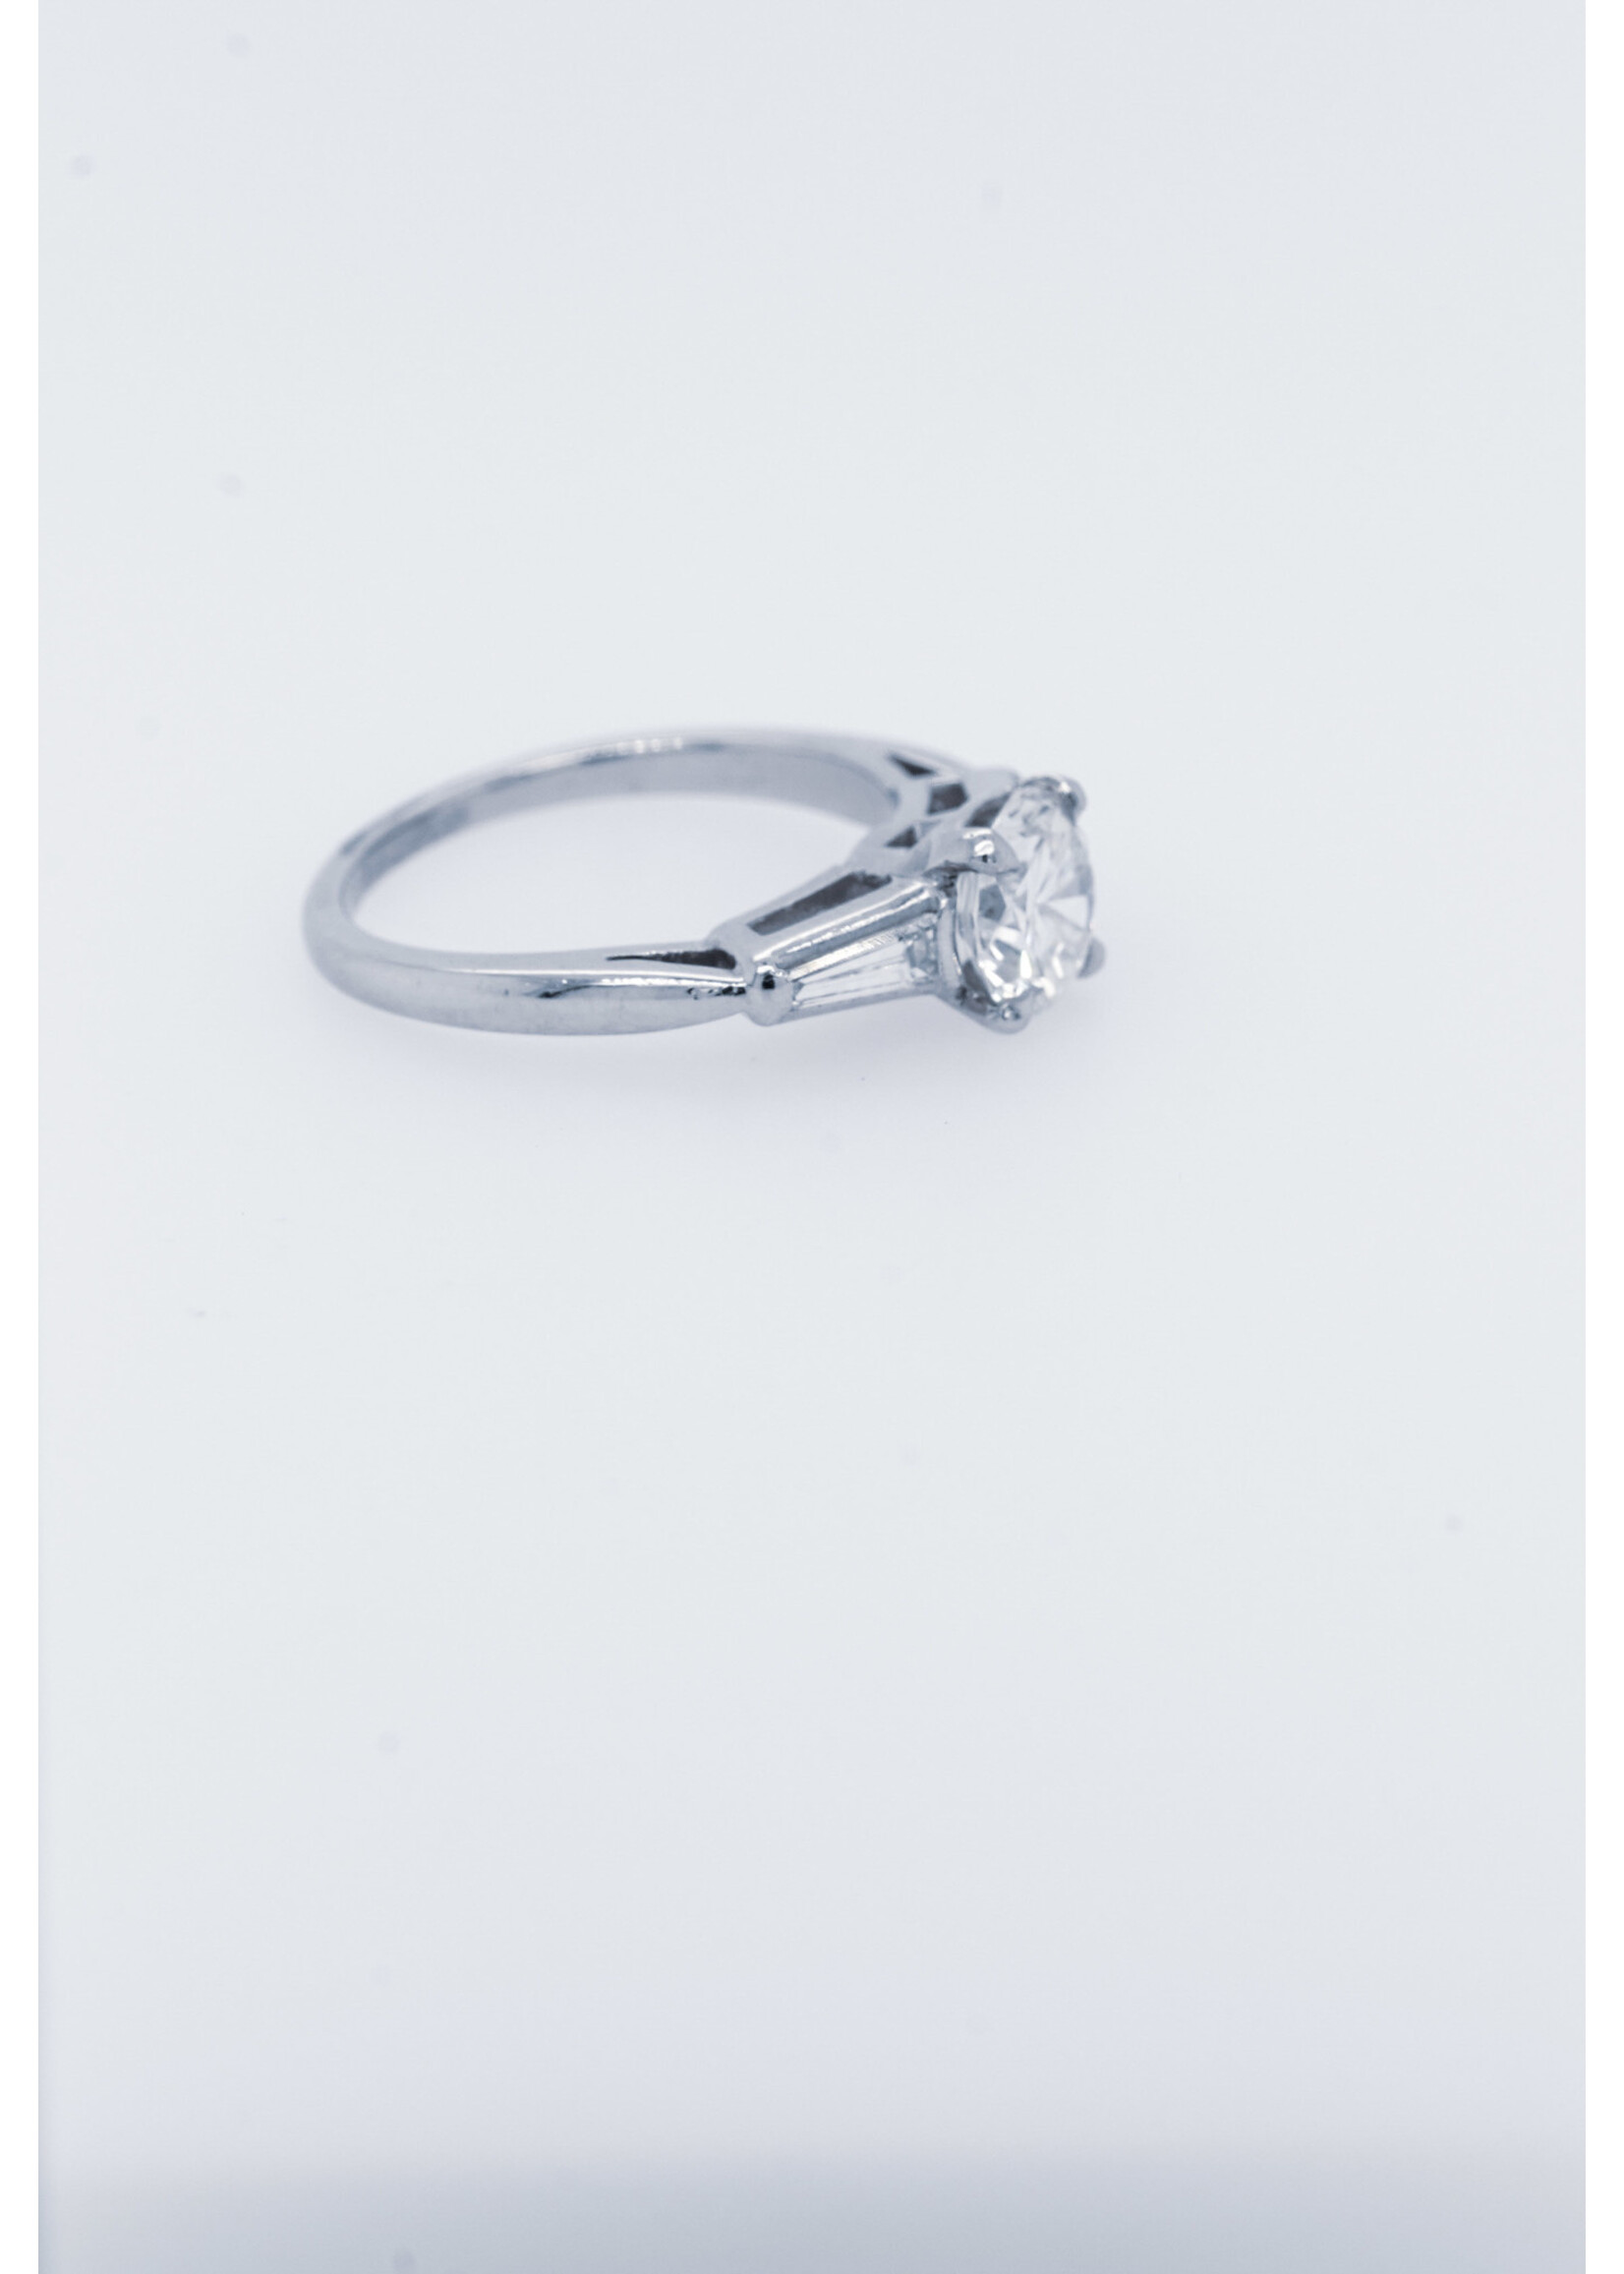 Platinum 1.34ctw (1.04ctr) H/SI2 Round Diamond & Baguette Engagement Ring (size 5.5)